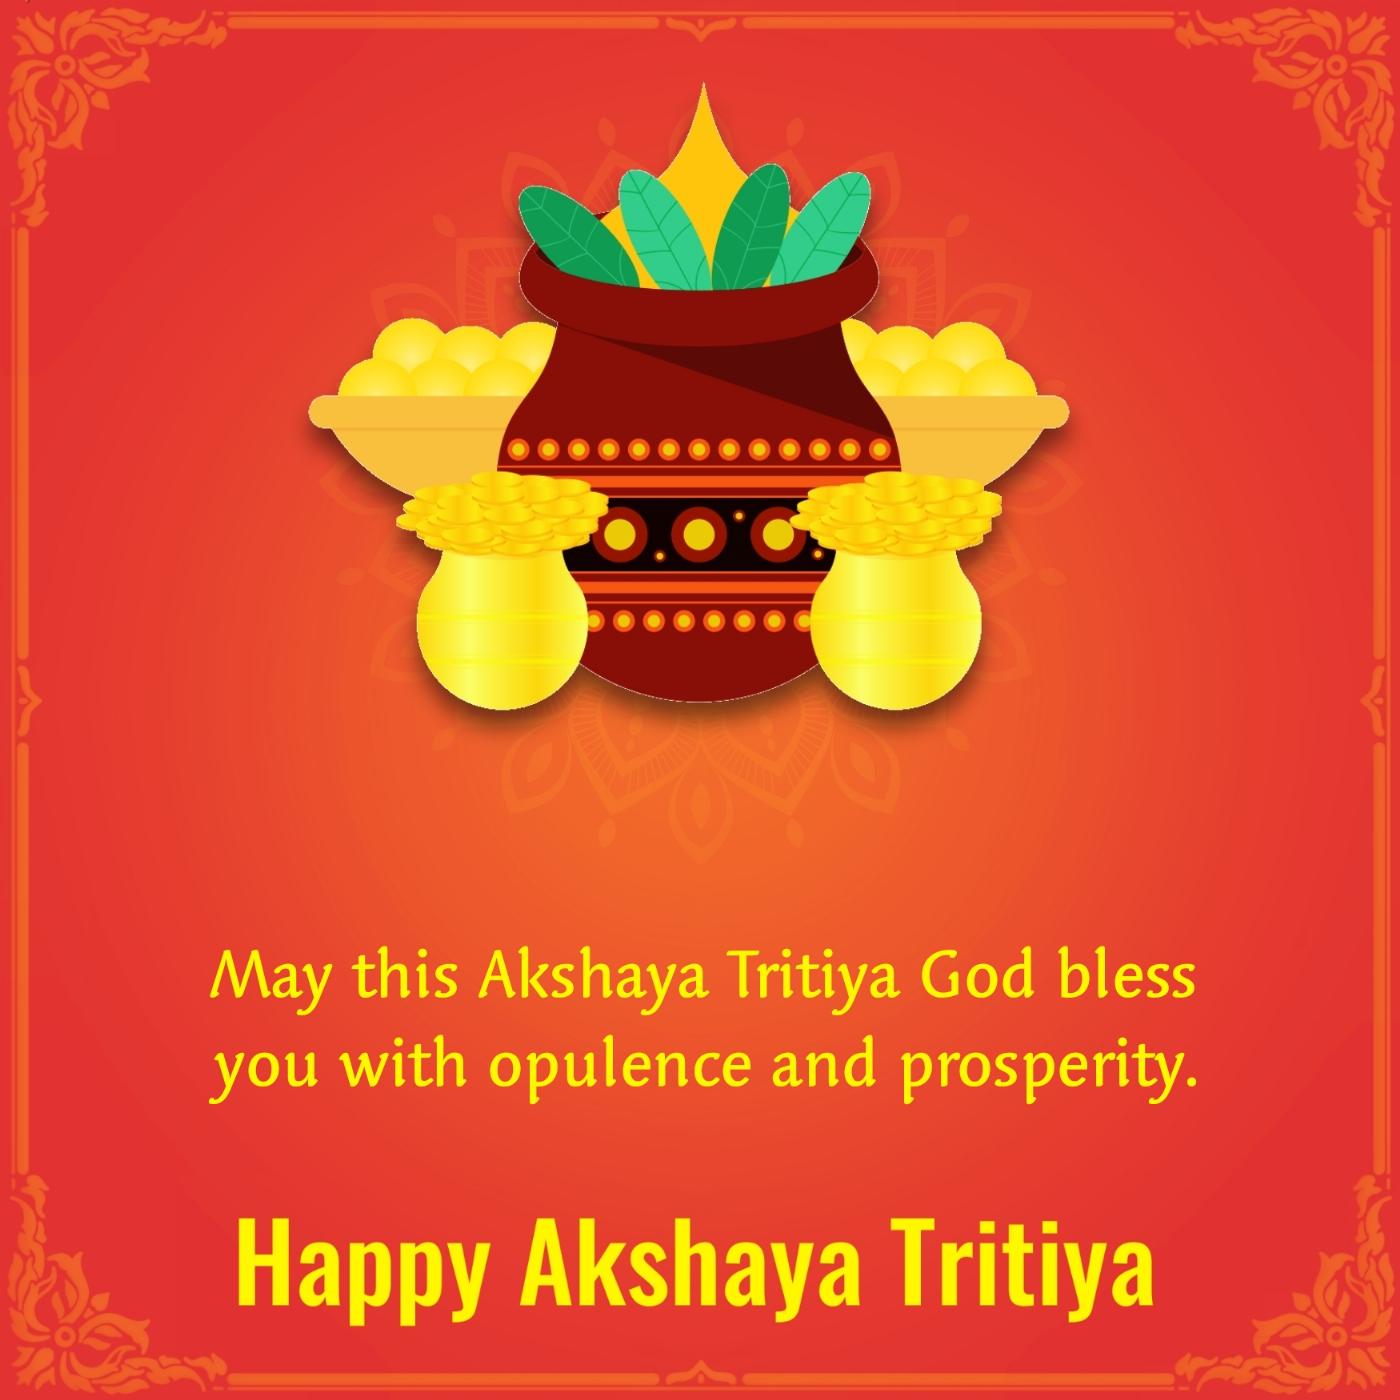 May this Akshaya Tritiya God bless you with opulence and prosperity